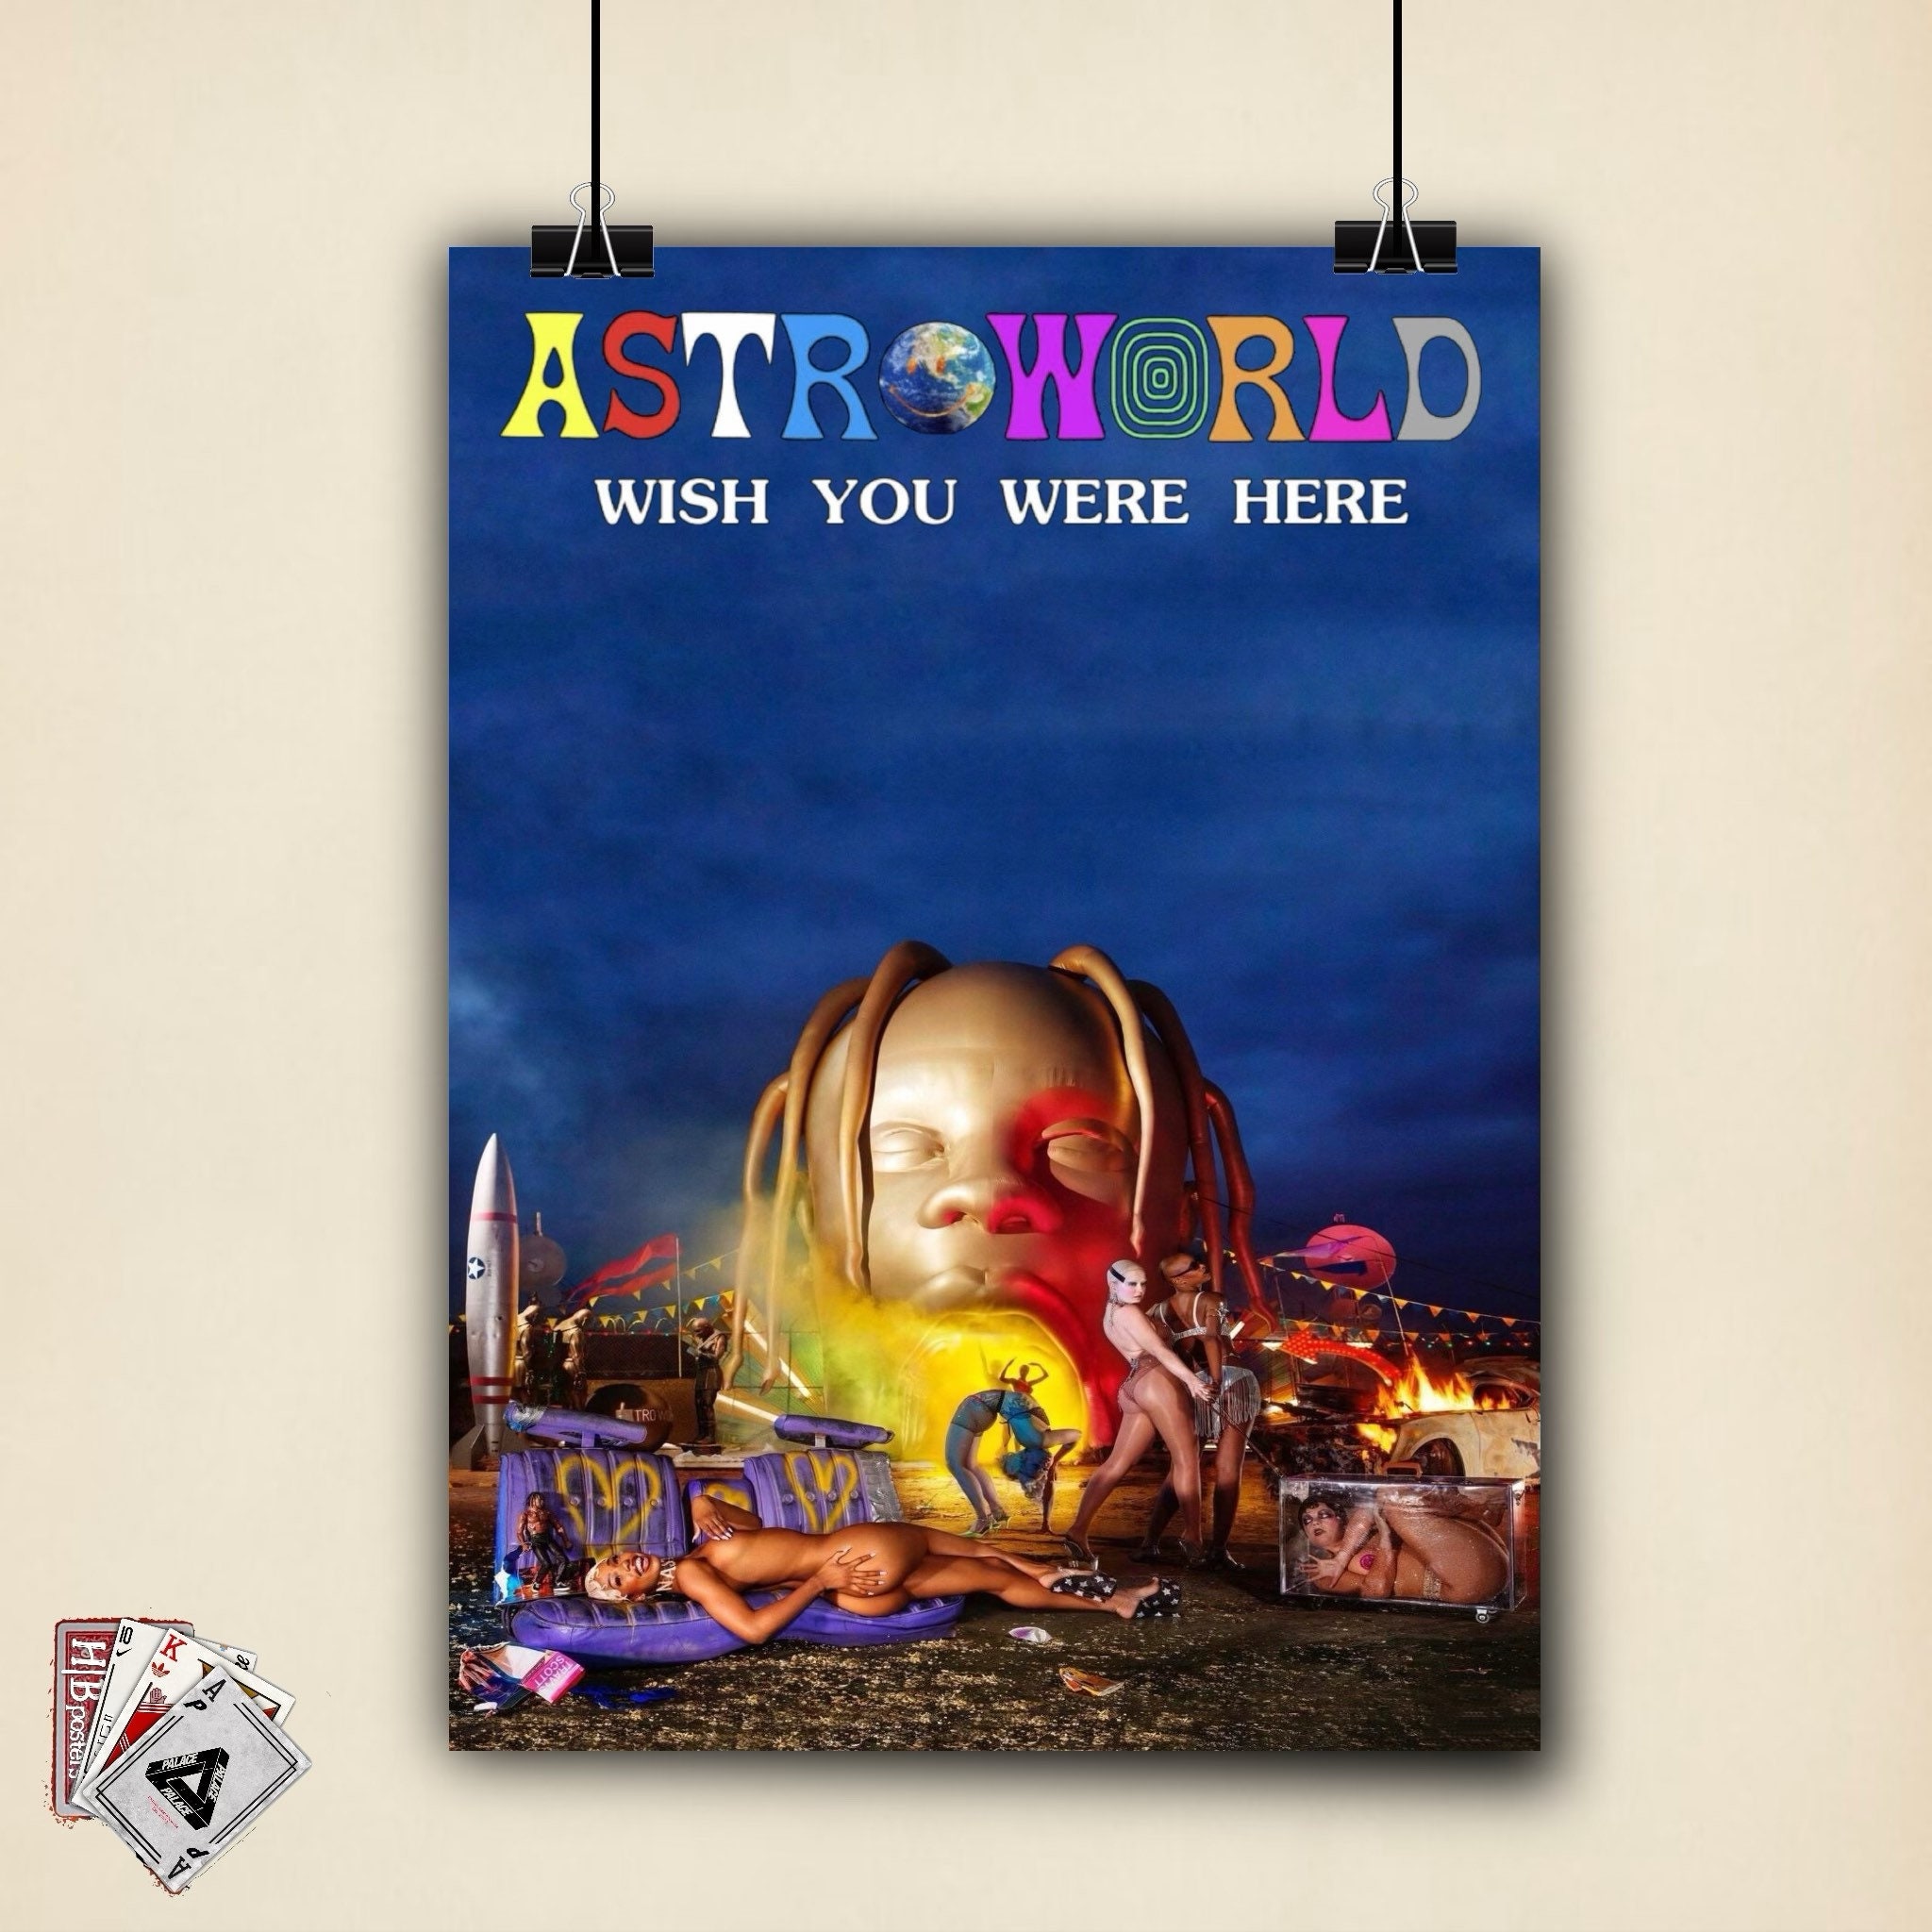 Travis - Astroworld Poster sold by Omogbadebo Olatunji